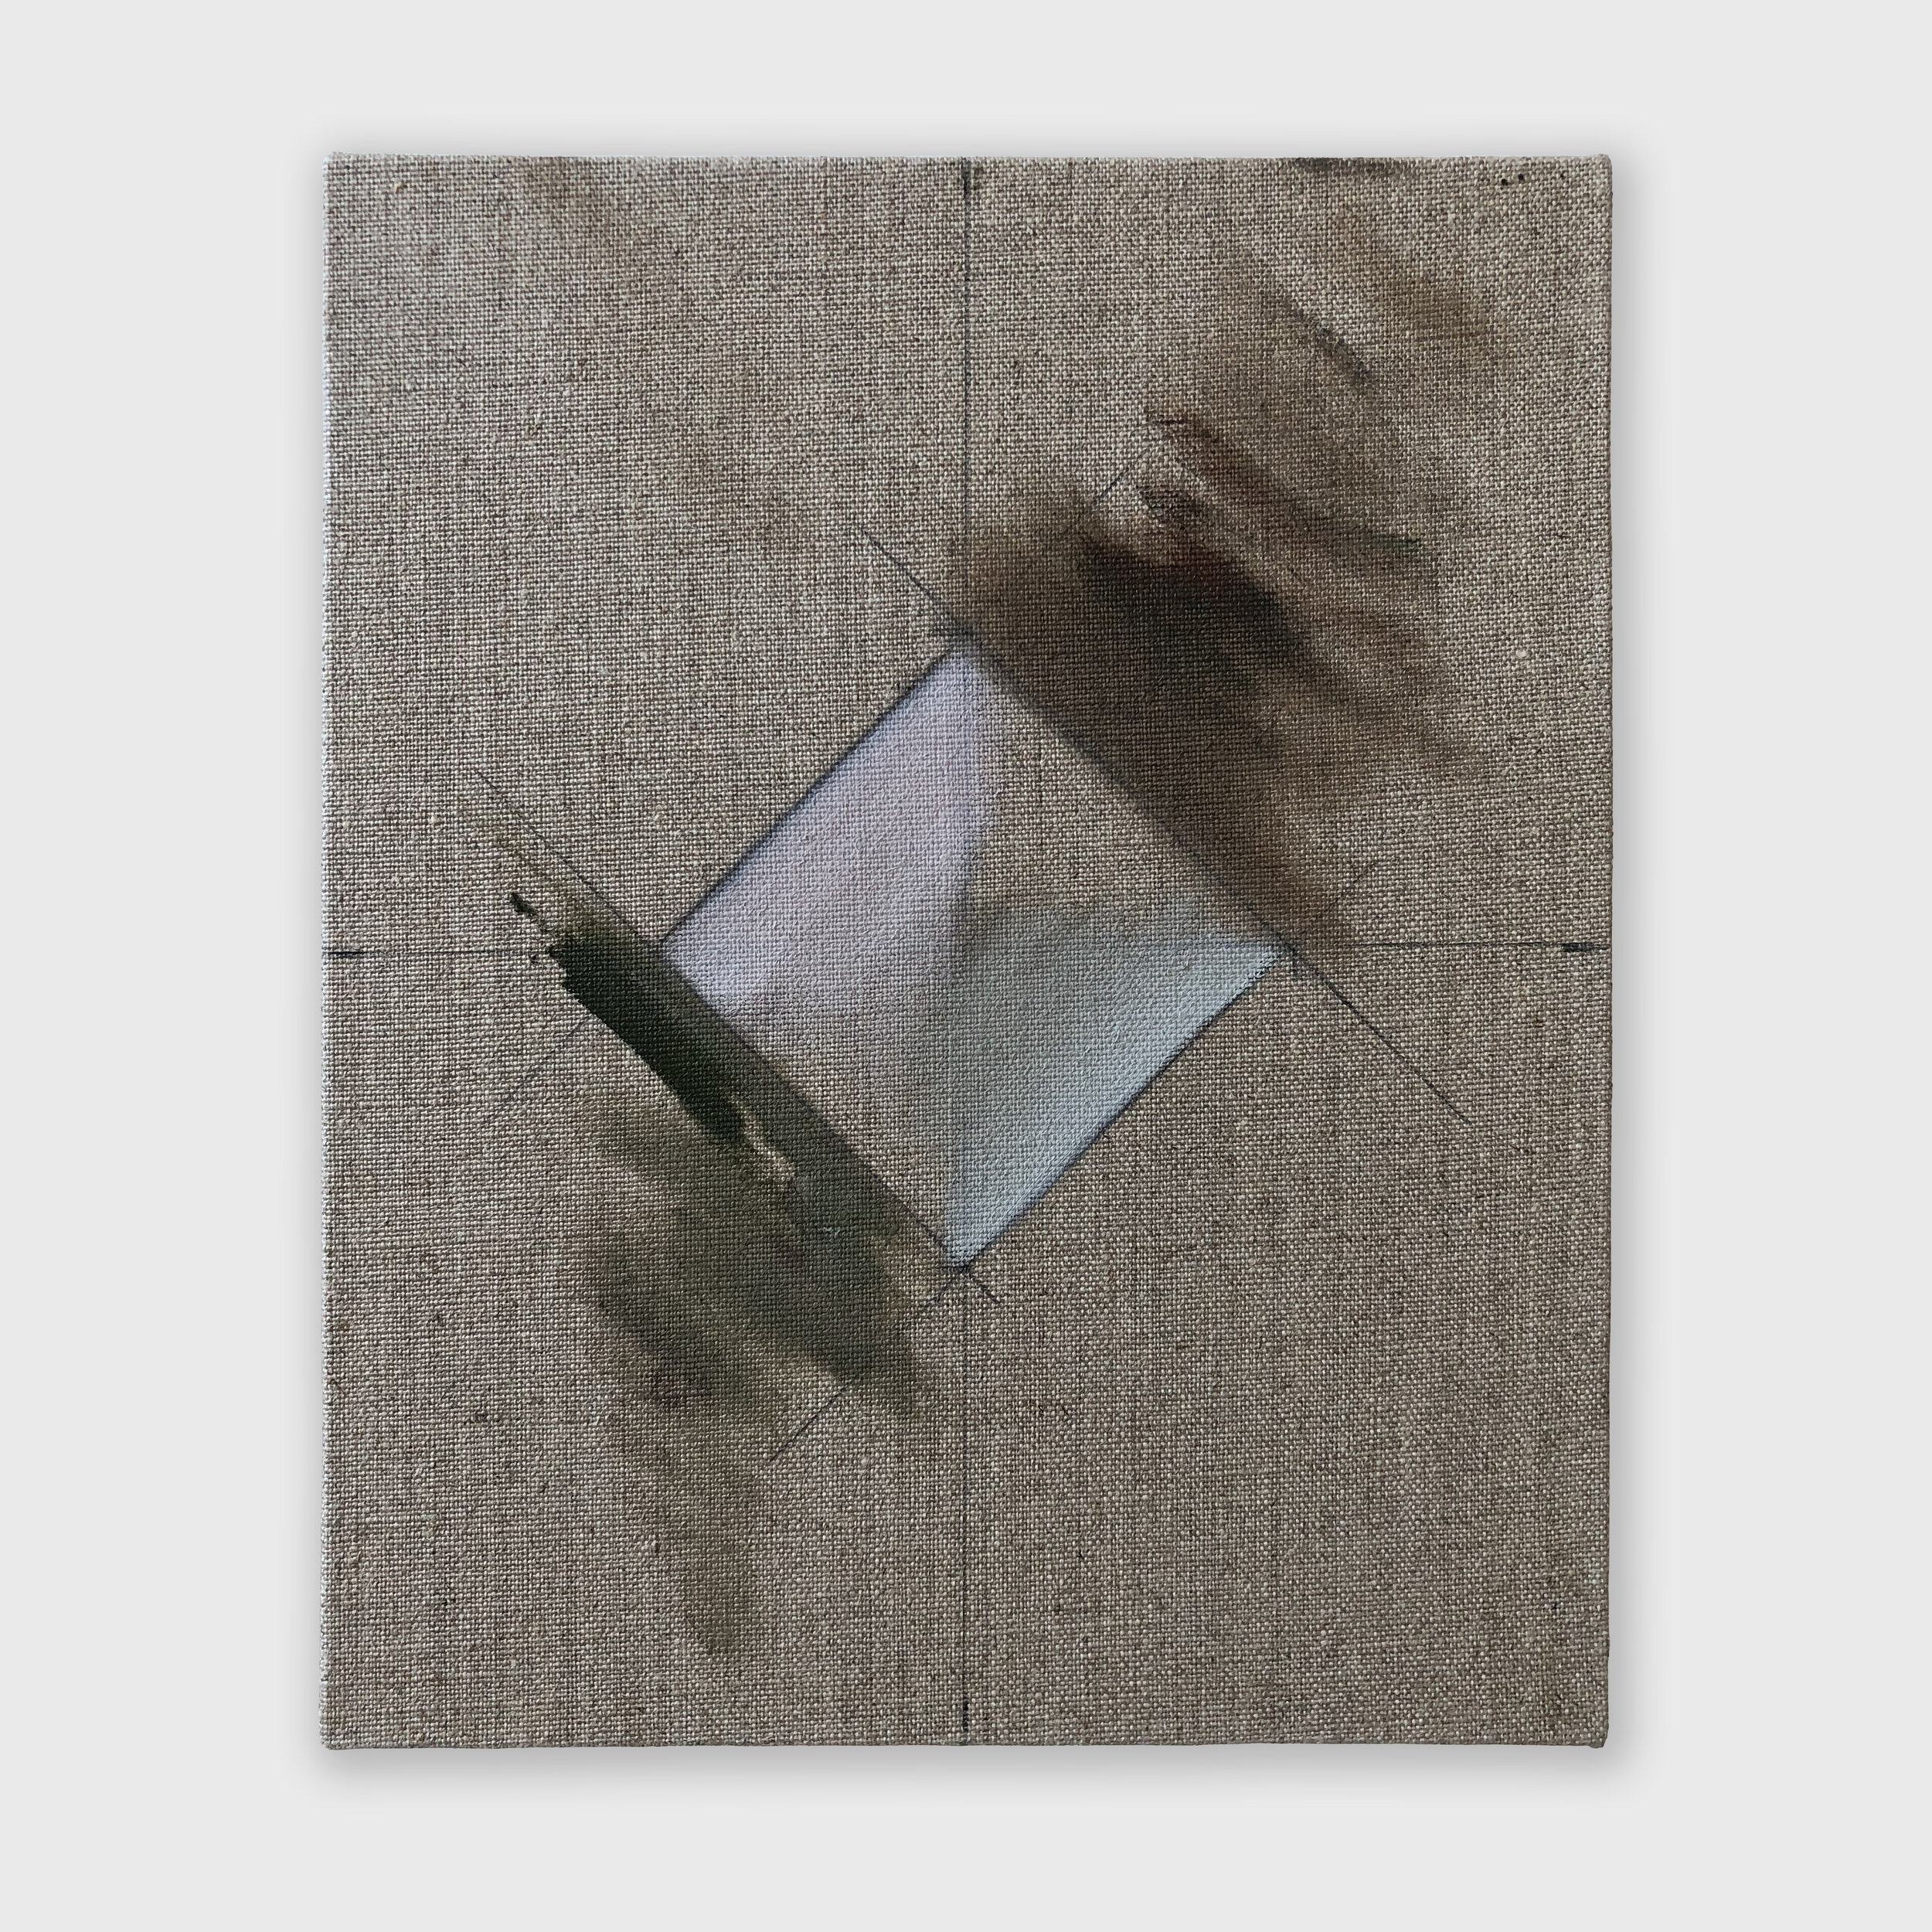 Untitled (Window 35), 2019 